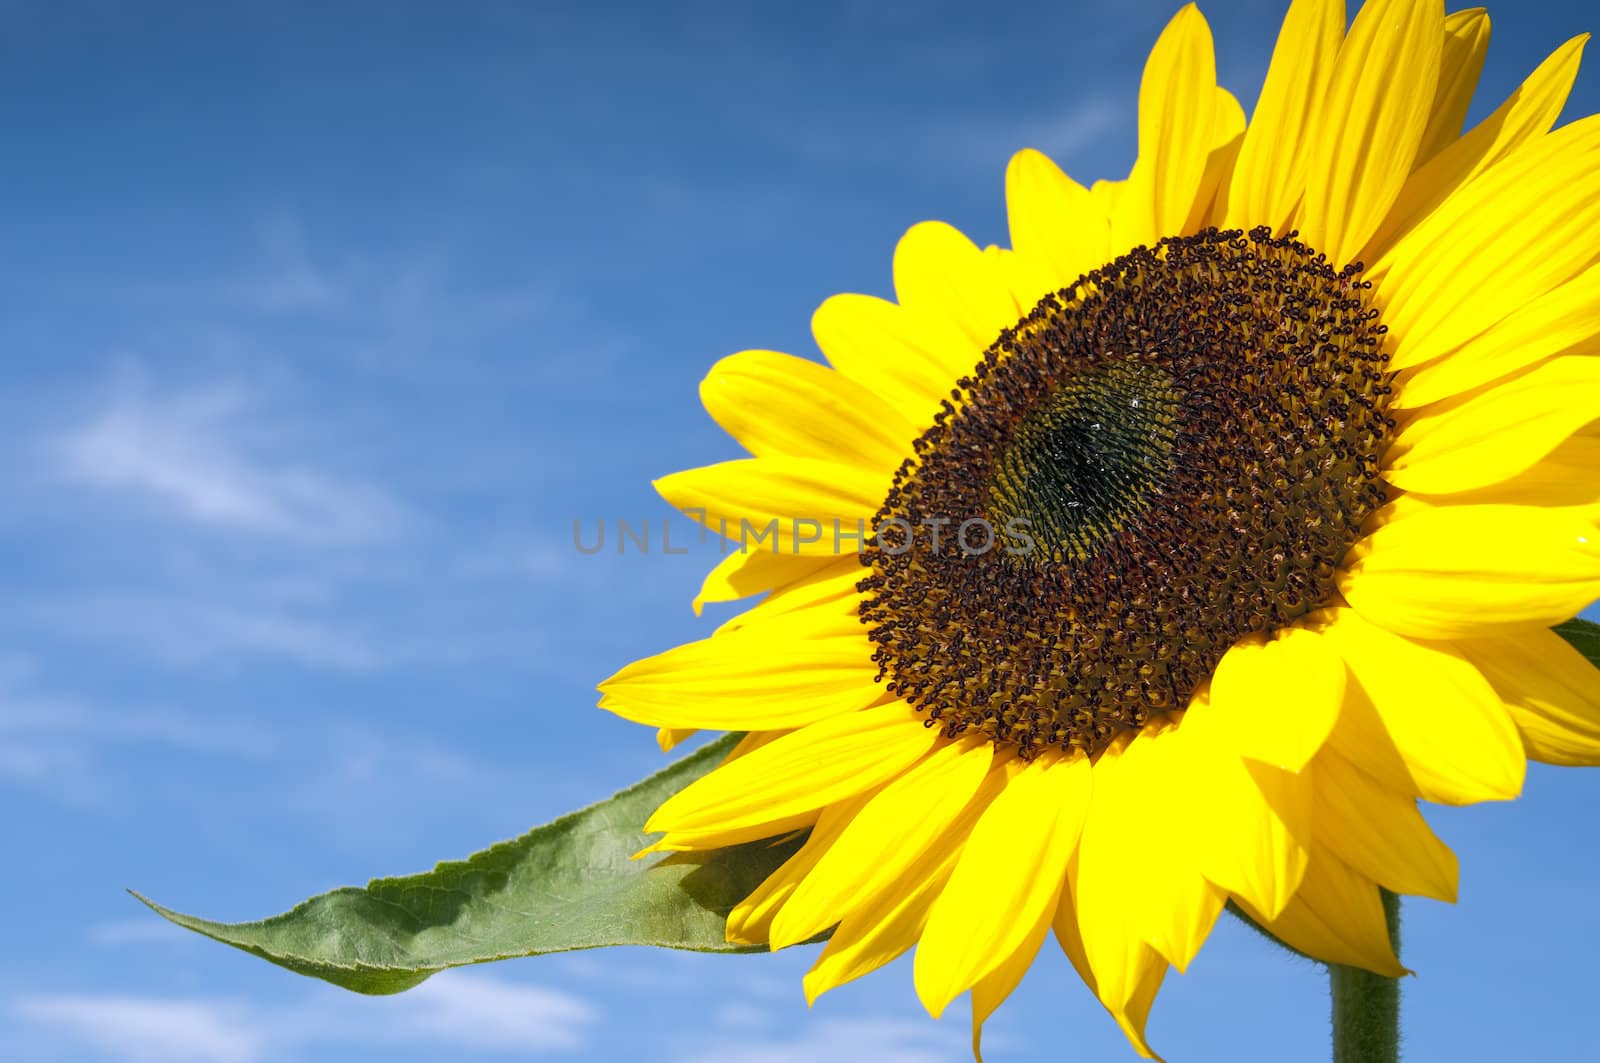 Sunflower by Rainman